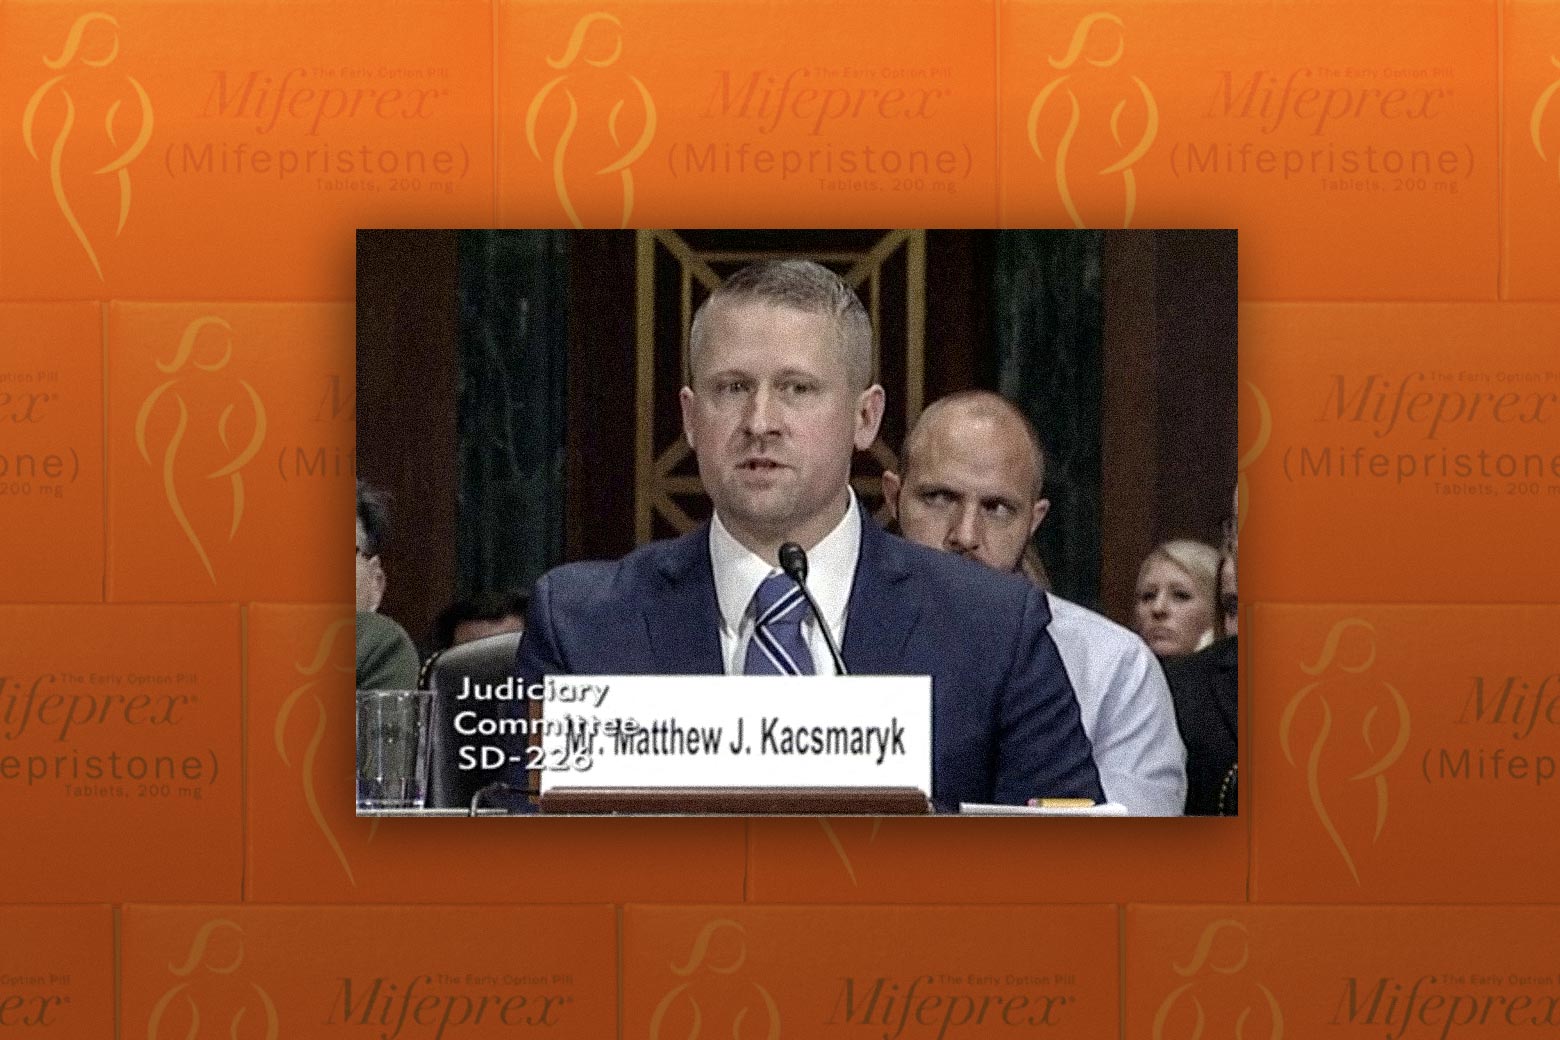 Judge Kacsmaryk, over an orange background of mifepristone.